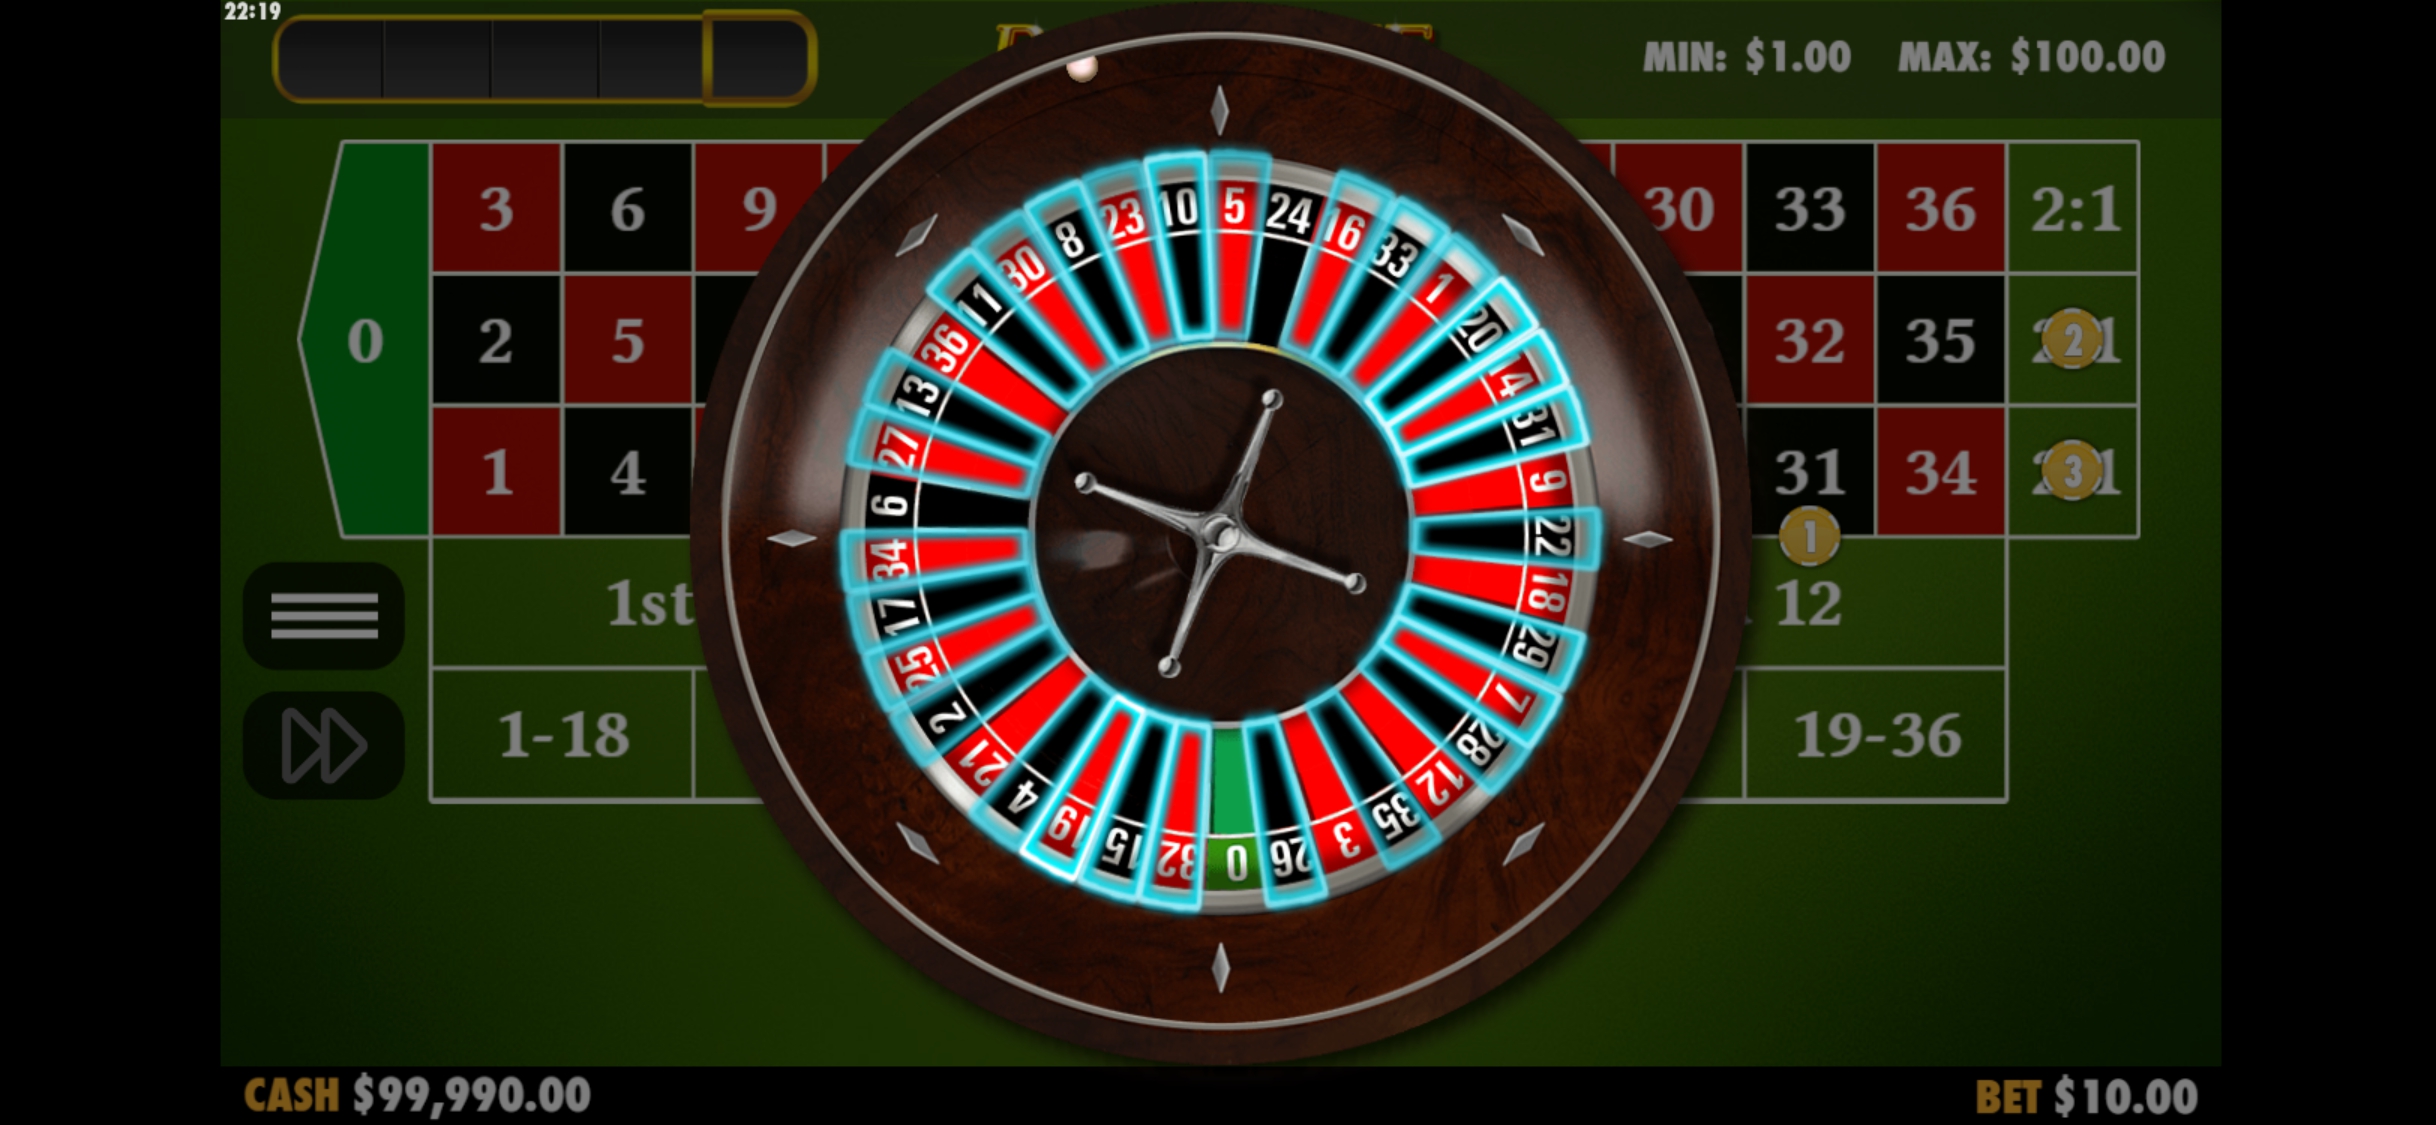 21 Dukes Casino Mobile Casino Games Review